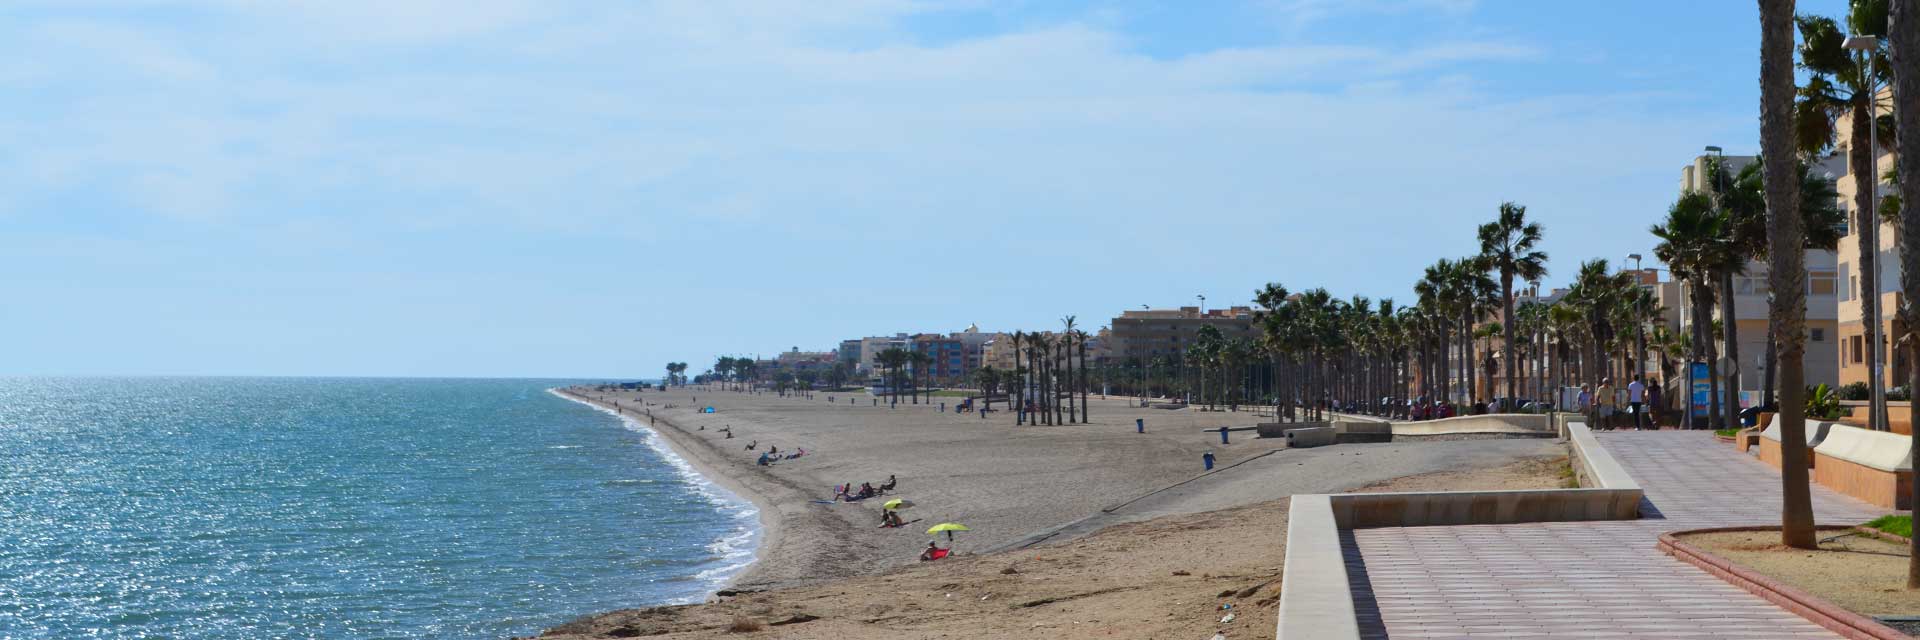 Beaches in Roquetas de Mar ▶ Almería Coast